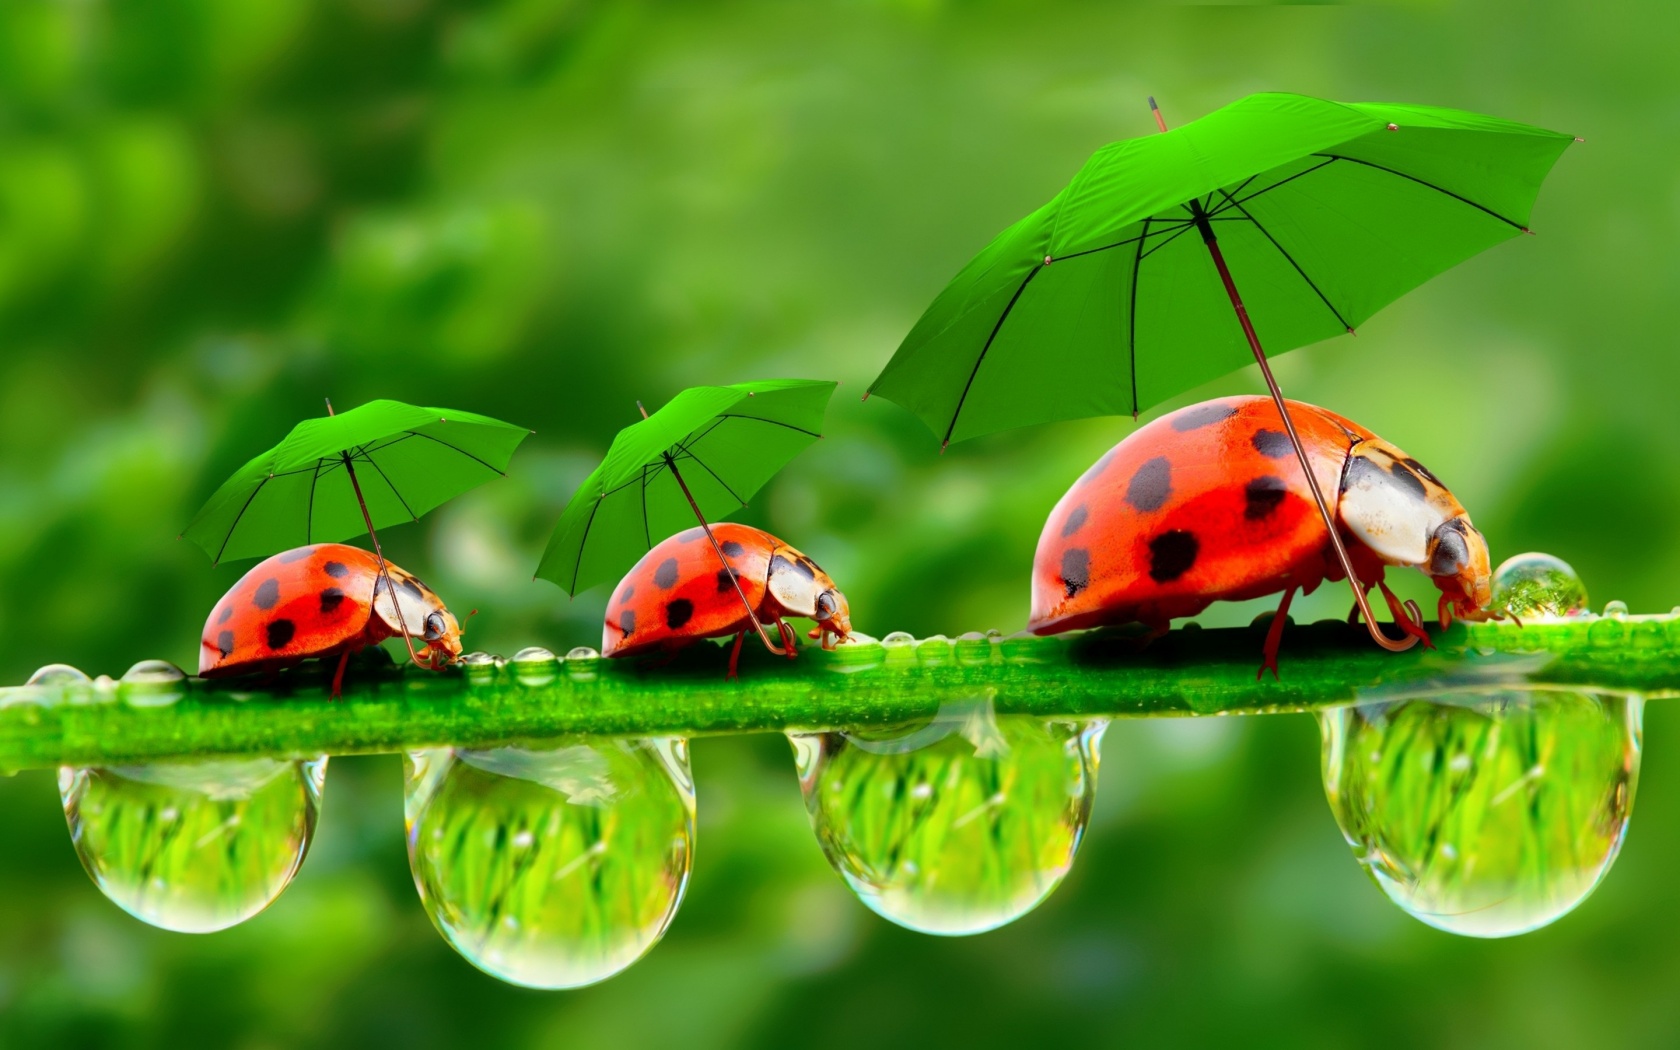 Funny Ladybugs With Umbrellas